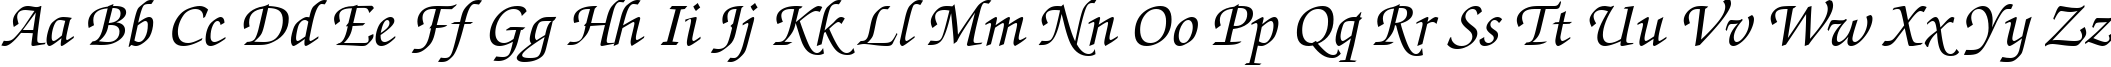 Пример написания английского алфавита шрифтом ITC Zapf Chancery Medium Italic